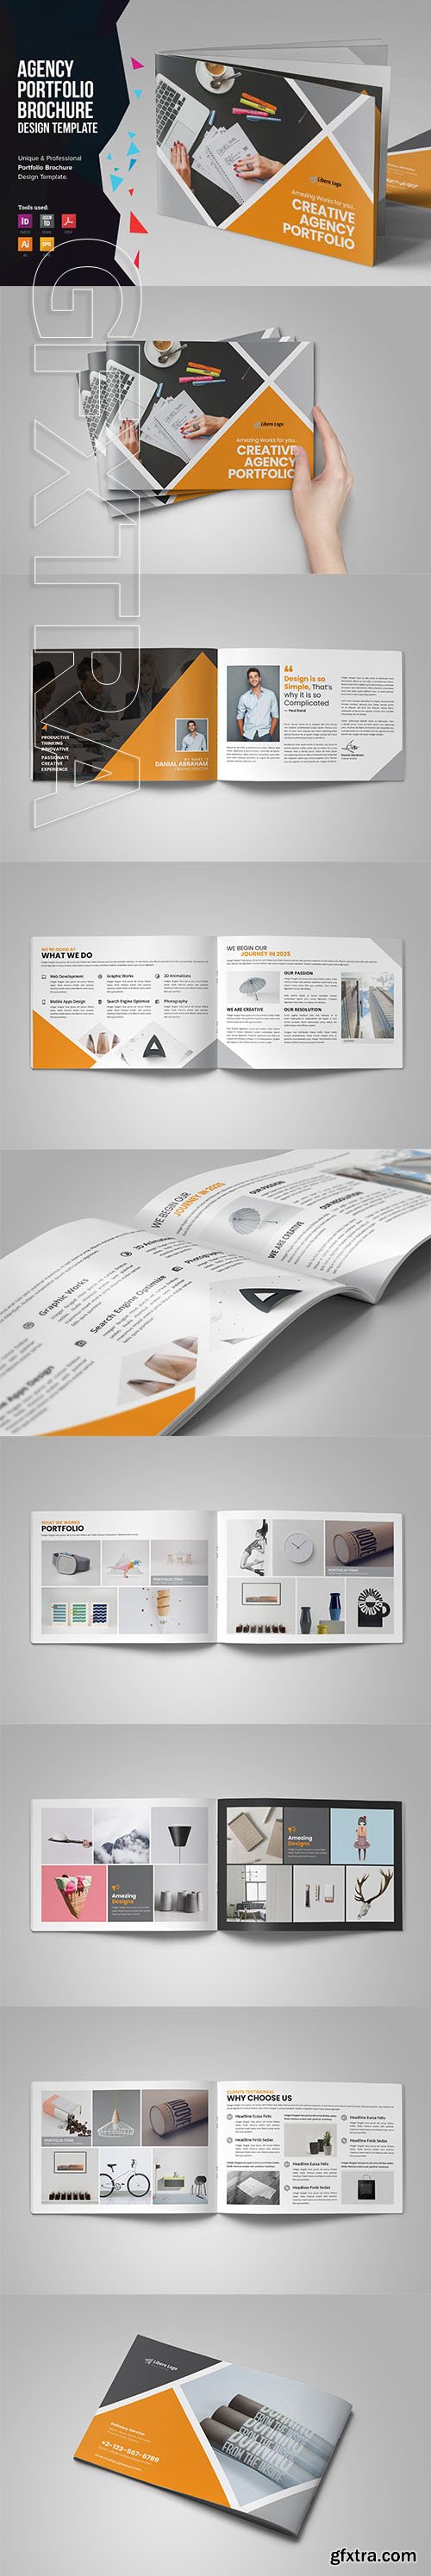 CreativeMarket - Digital Agency Portfolio Brochure v2 3481890